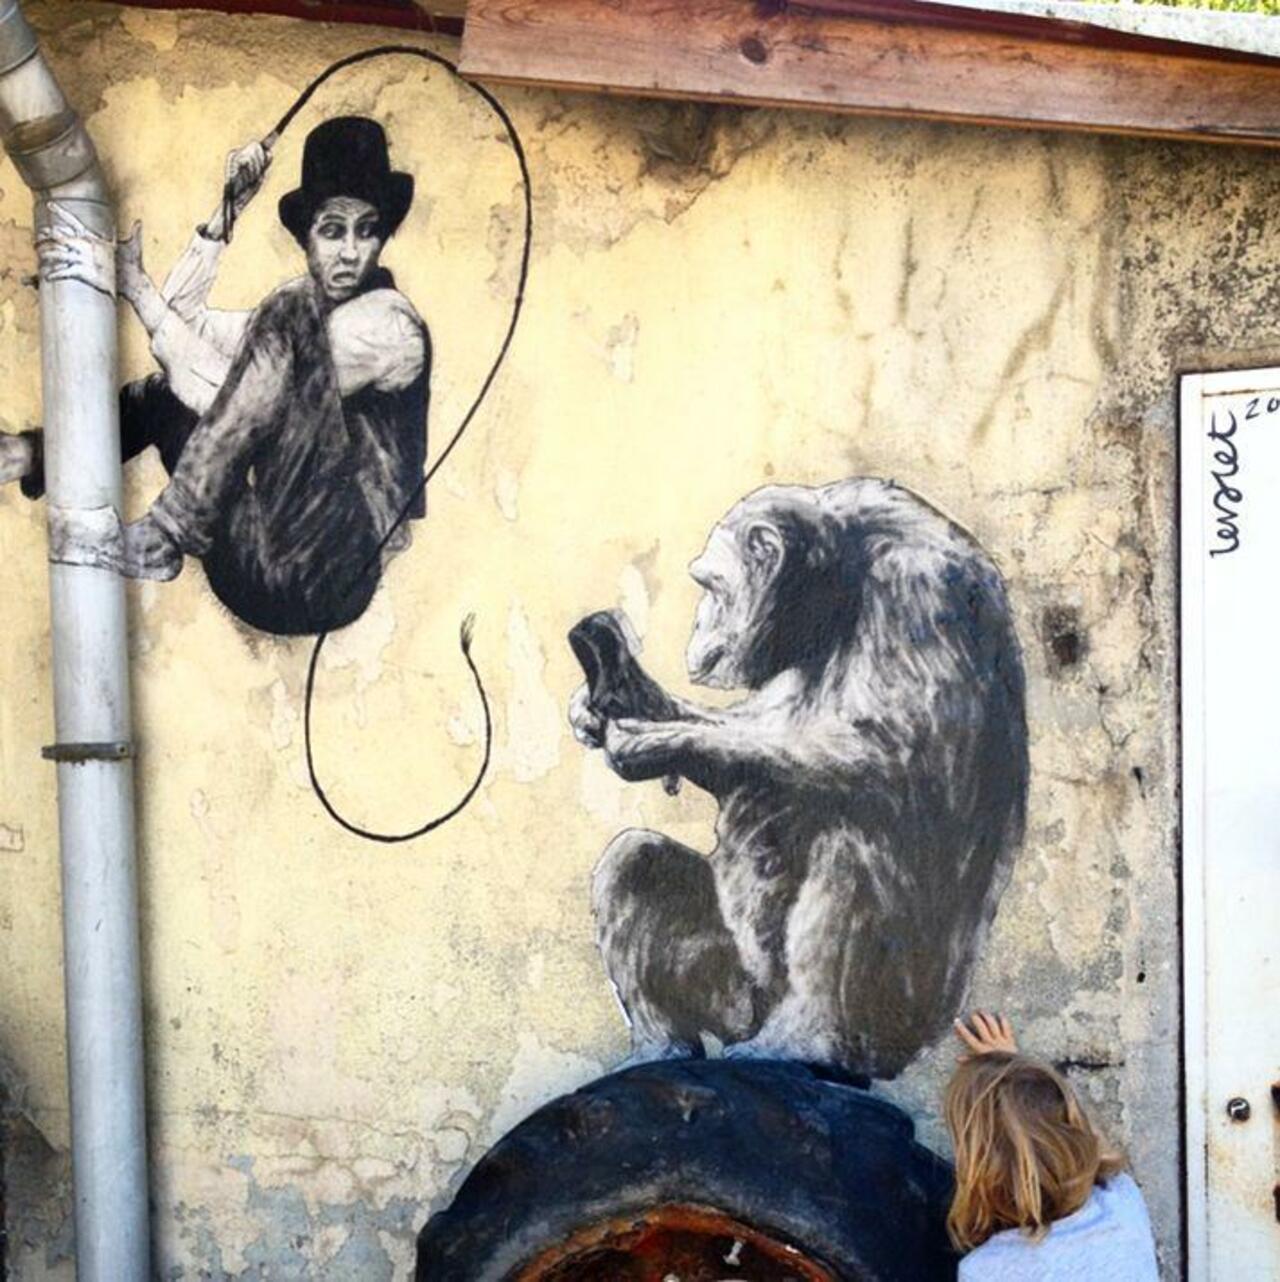 circumjacent_fr: #Paris #graffiti photo by ceky_art http://ift.tt/1RIA9q0 #StreetArt http://t.co/PxnrG7vHwI